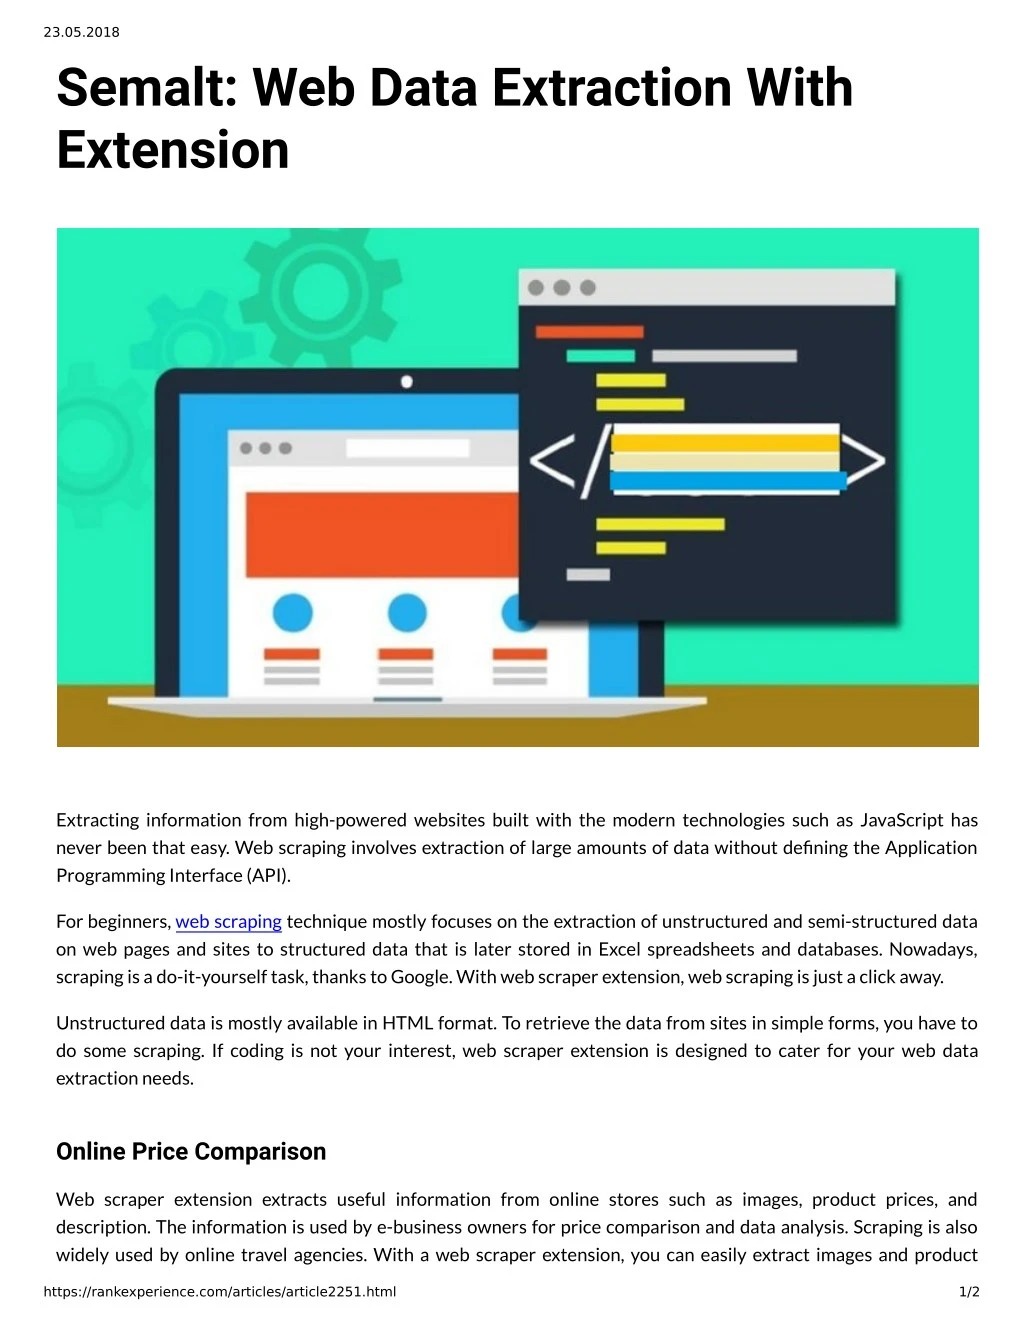 23 05 2018 semalt web data extraction with